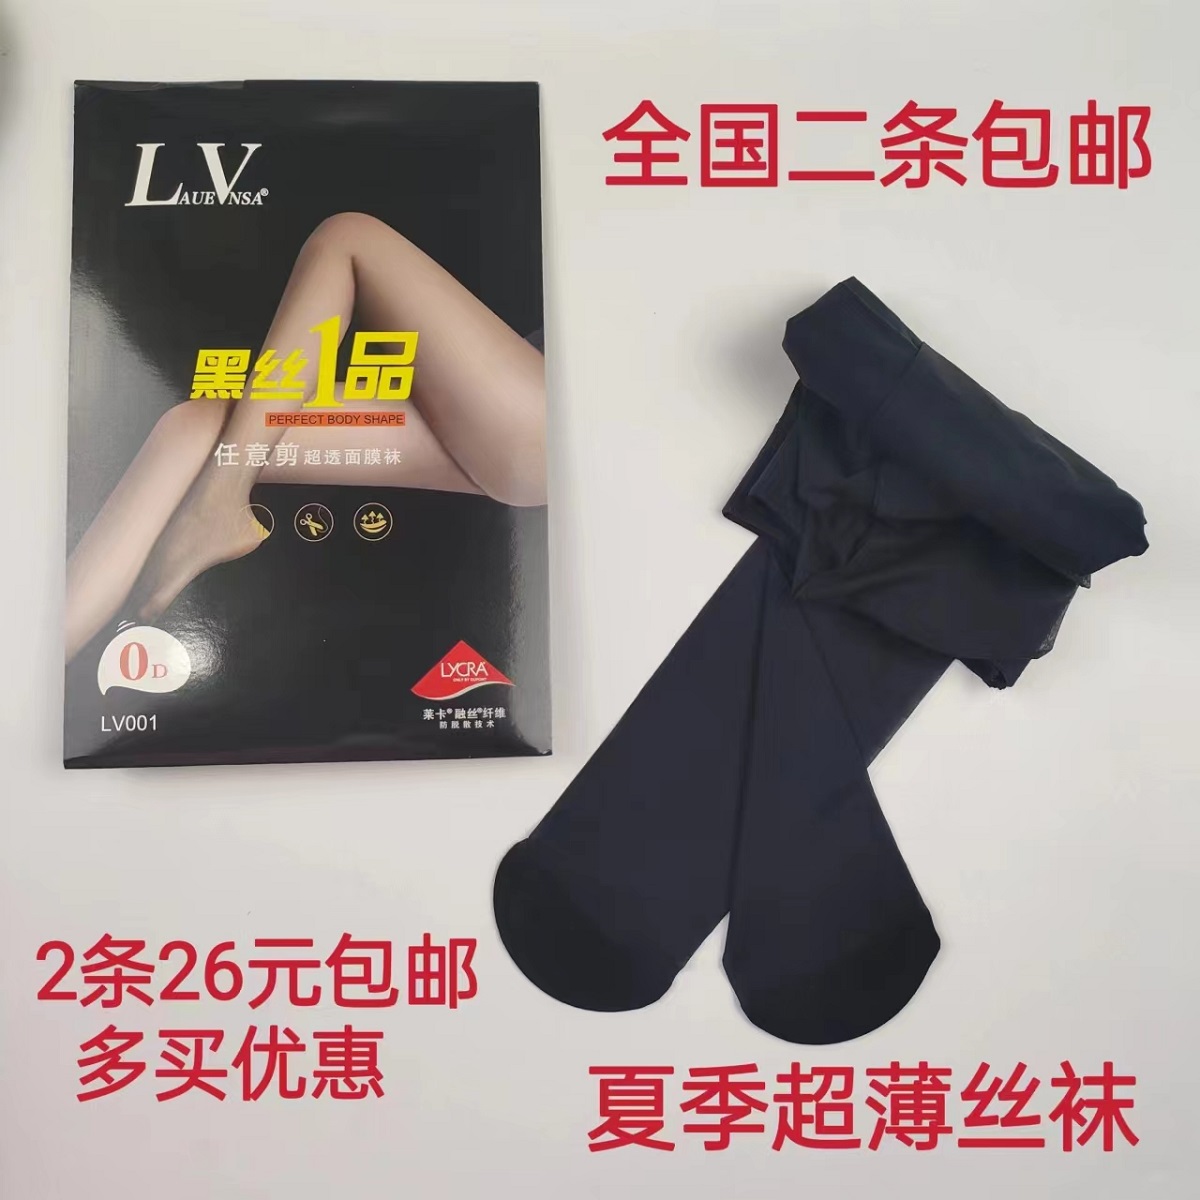 LaueVnsa001超薄高清0d丝袜纯欲黑丝超透防勾丝裸感自然美腿连袜